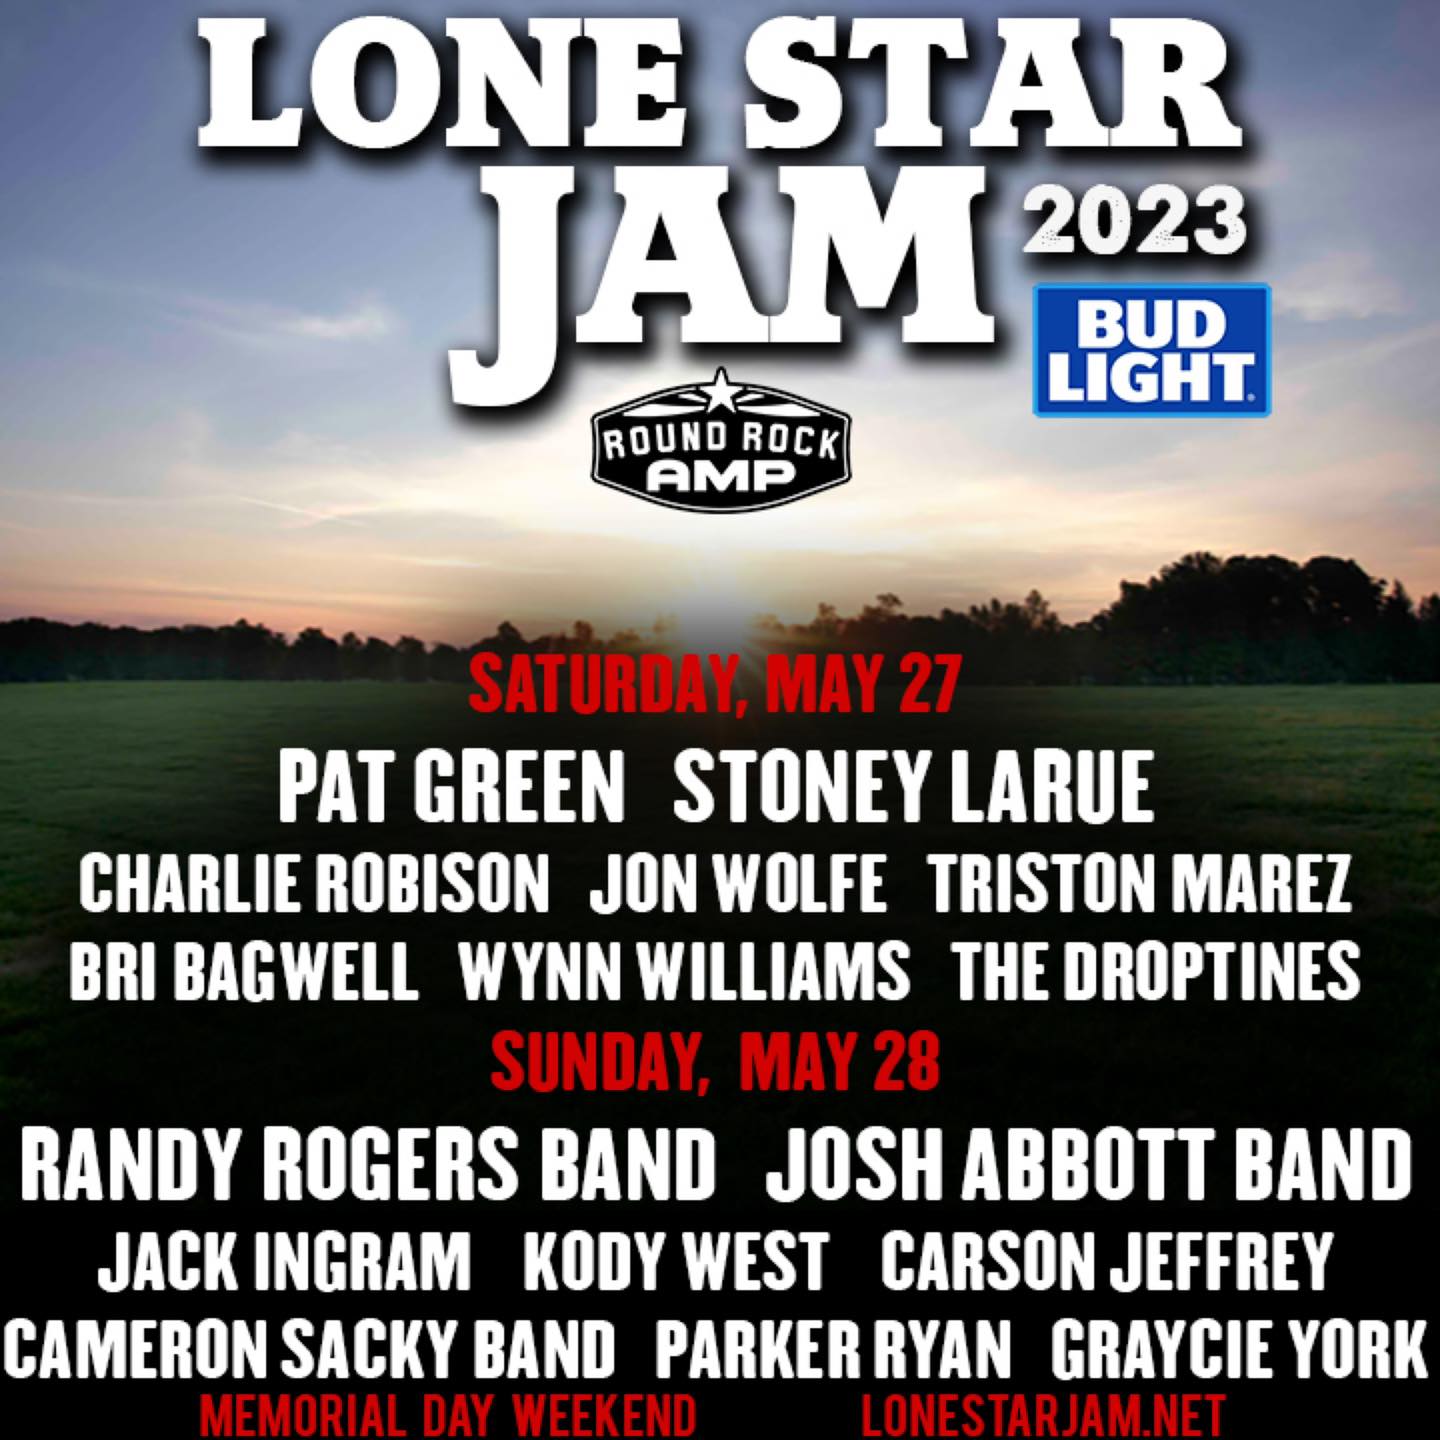 Lone Star Jam - Round Rock, TX